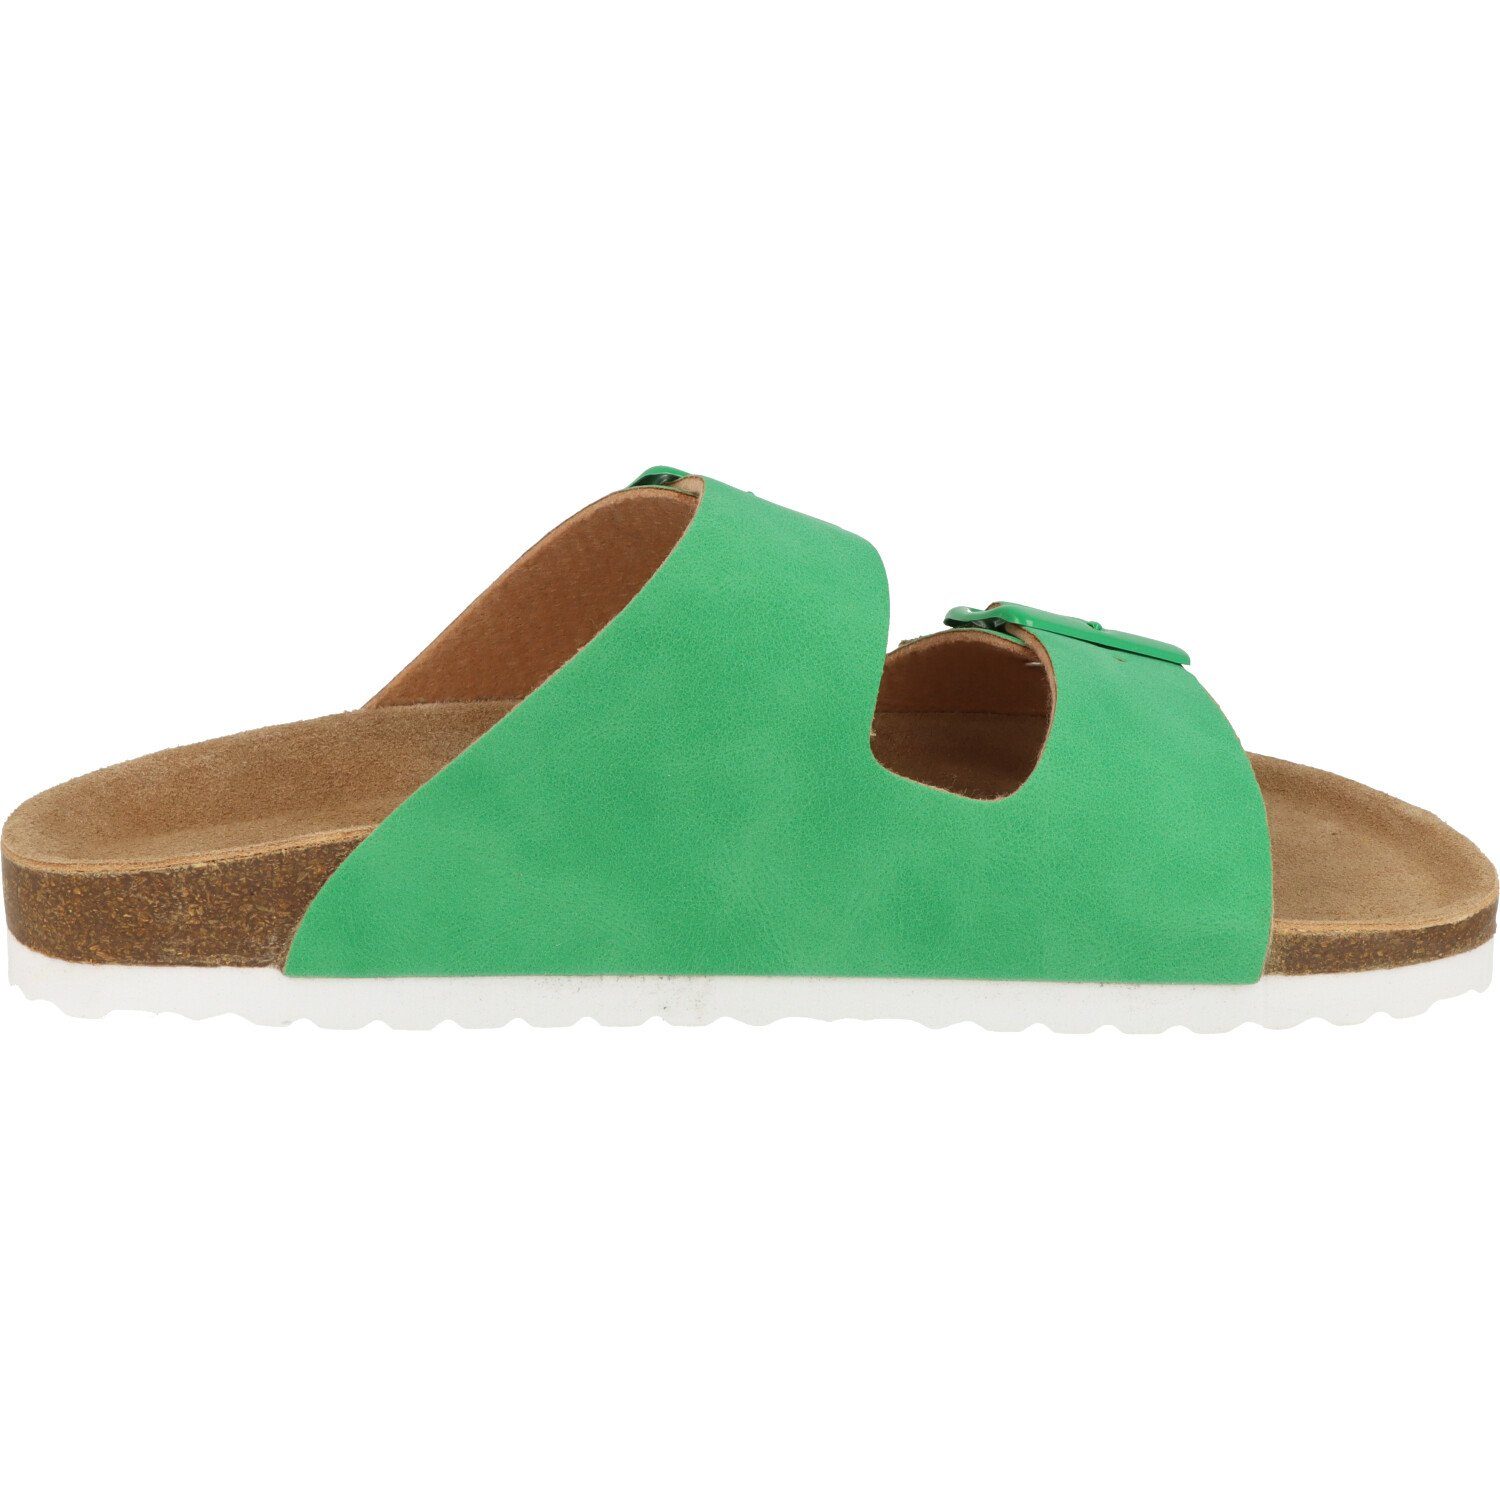 Pantolette Schuhe Komfort Green Damen of piece 274-022 mind. Sandale Lederfußbett